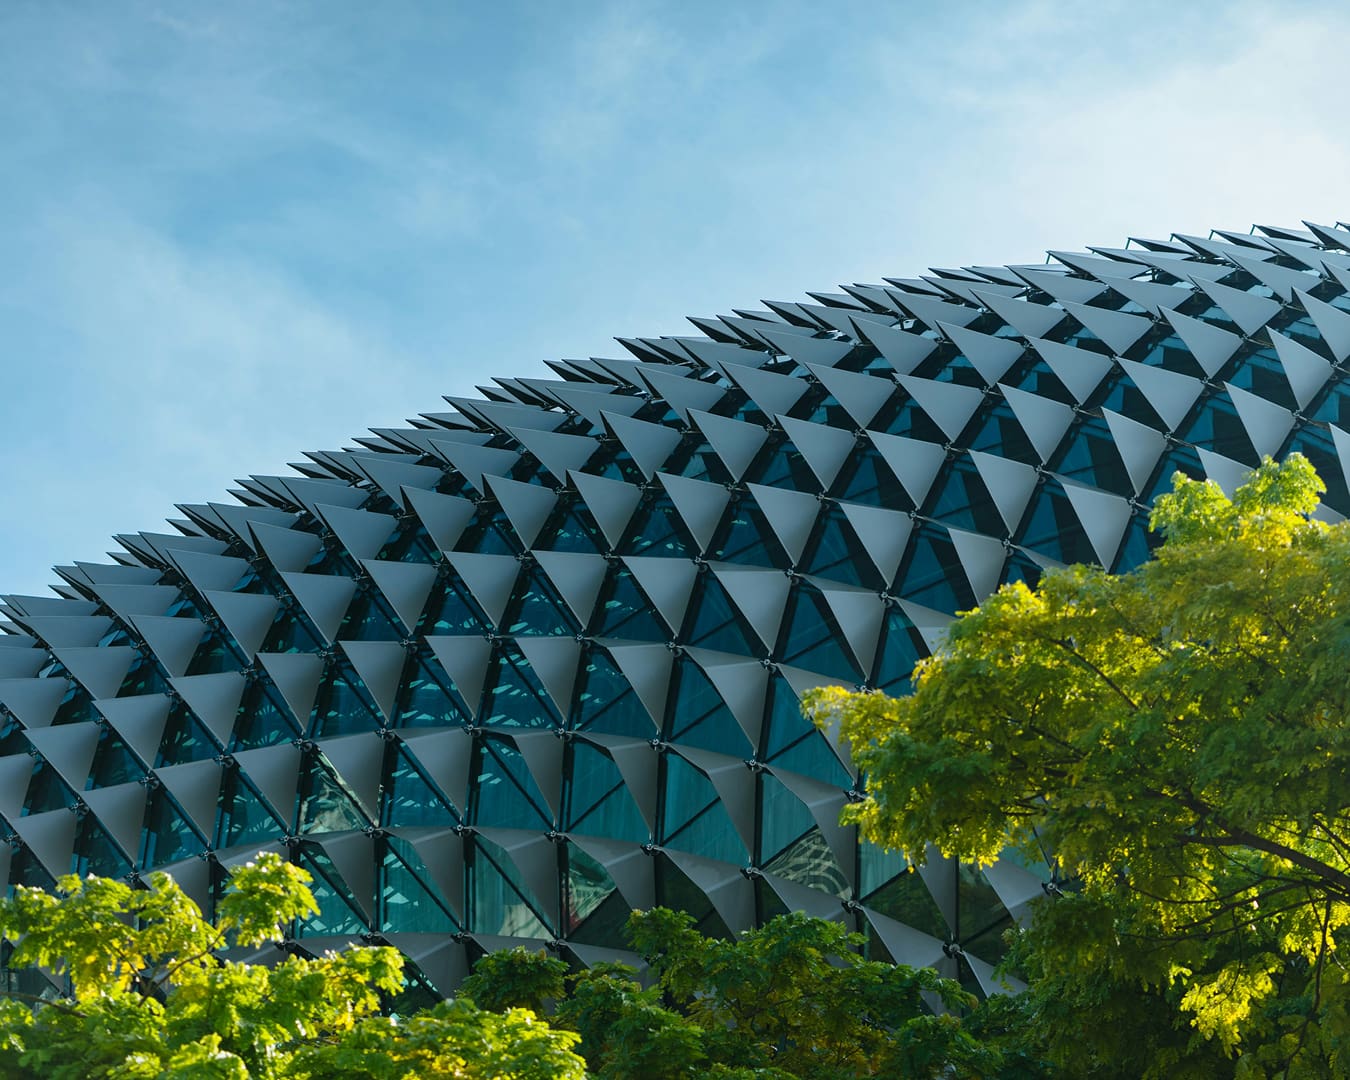 The striking geometric exterior of the Esplanade in Singapore